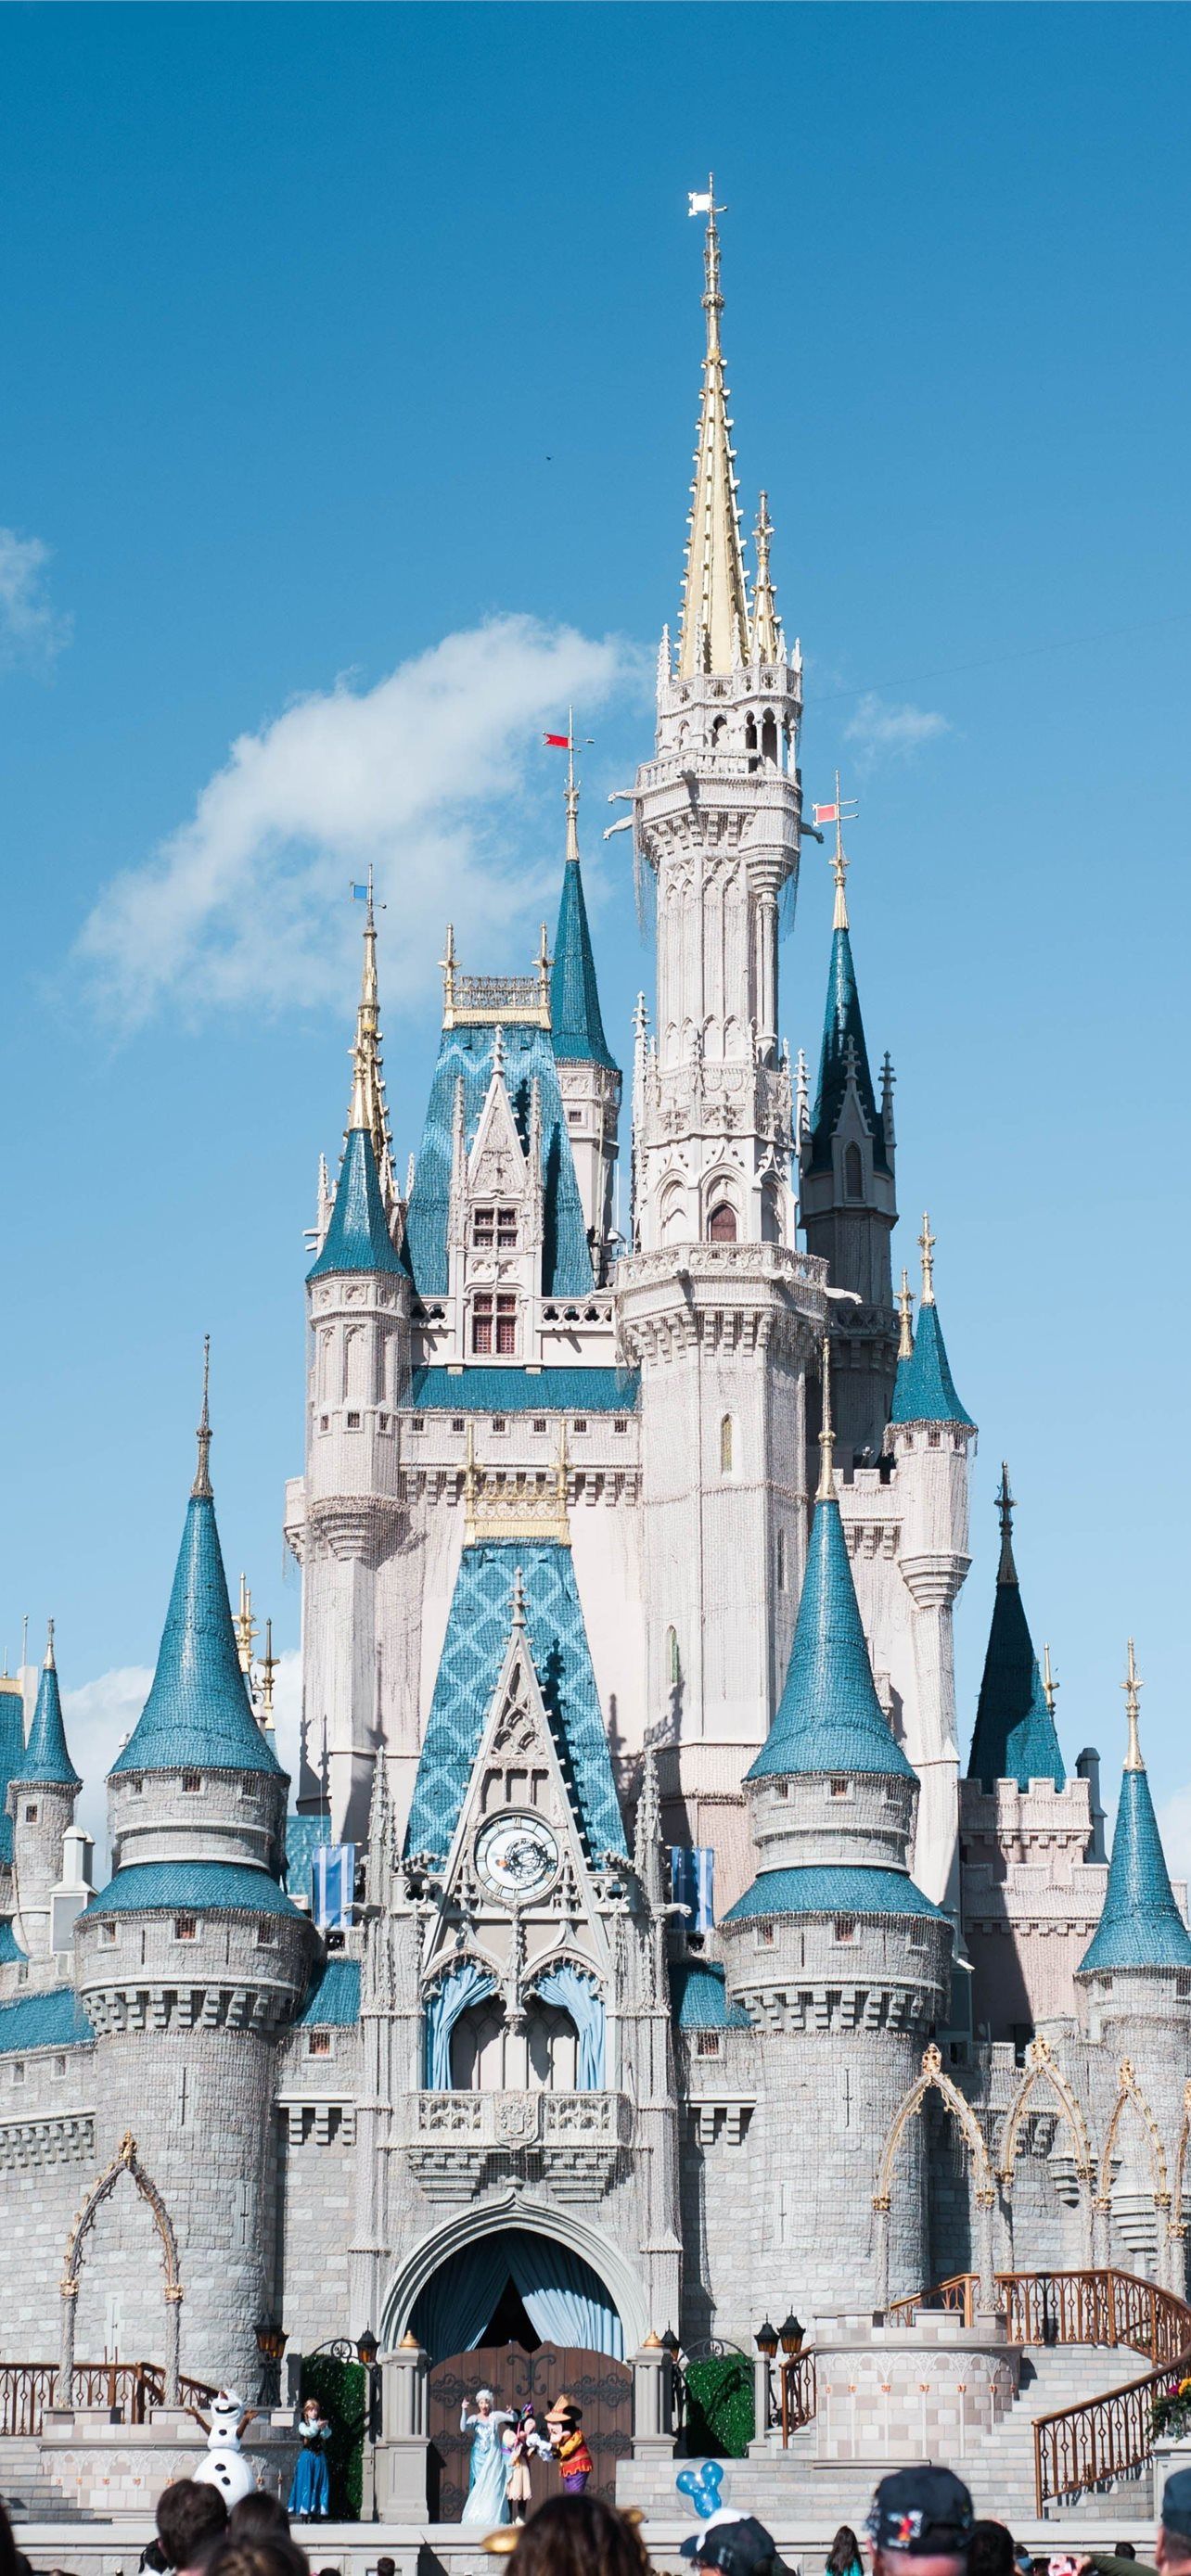 IPhone wallpaper of the castle at Disney World. - Disneyland